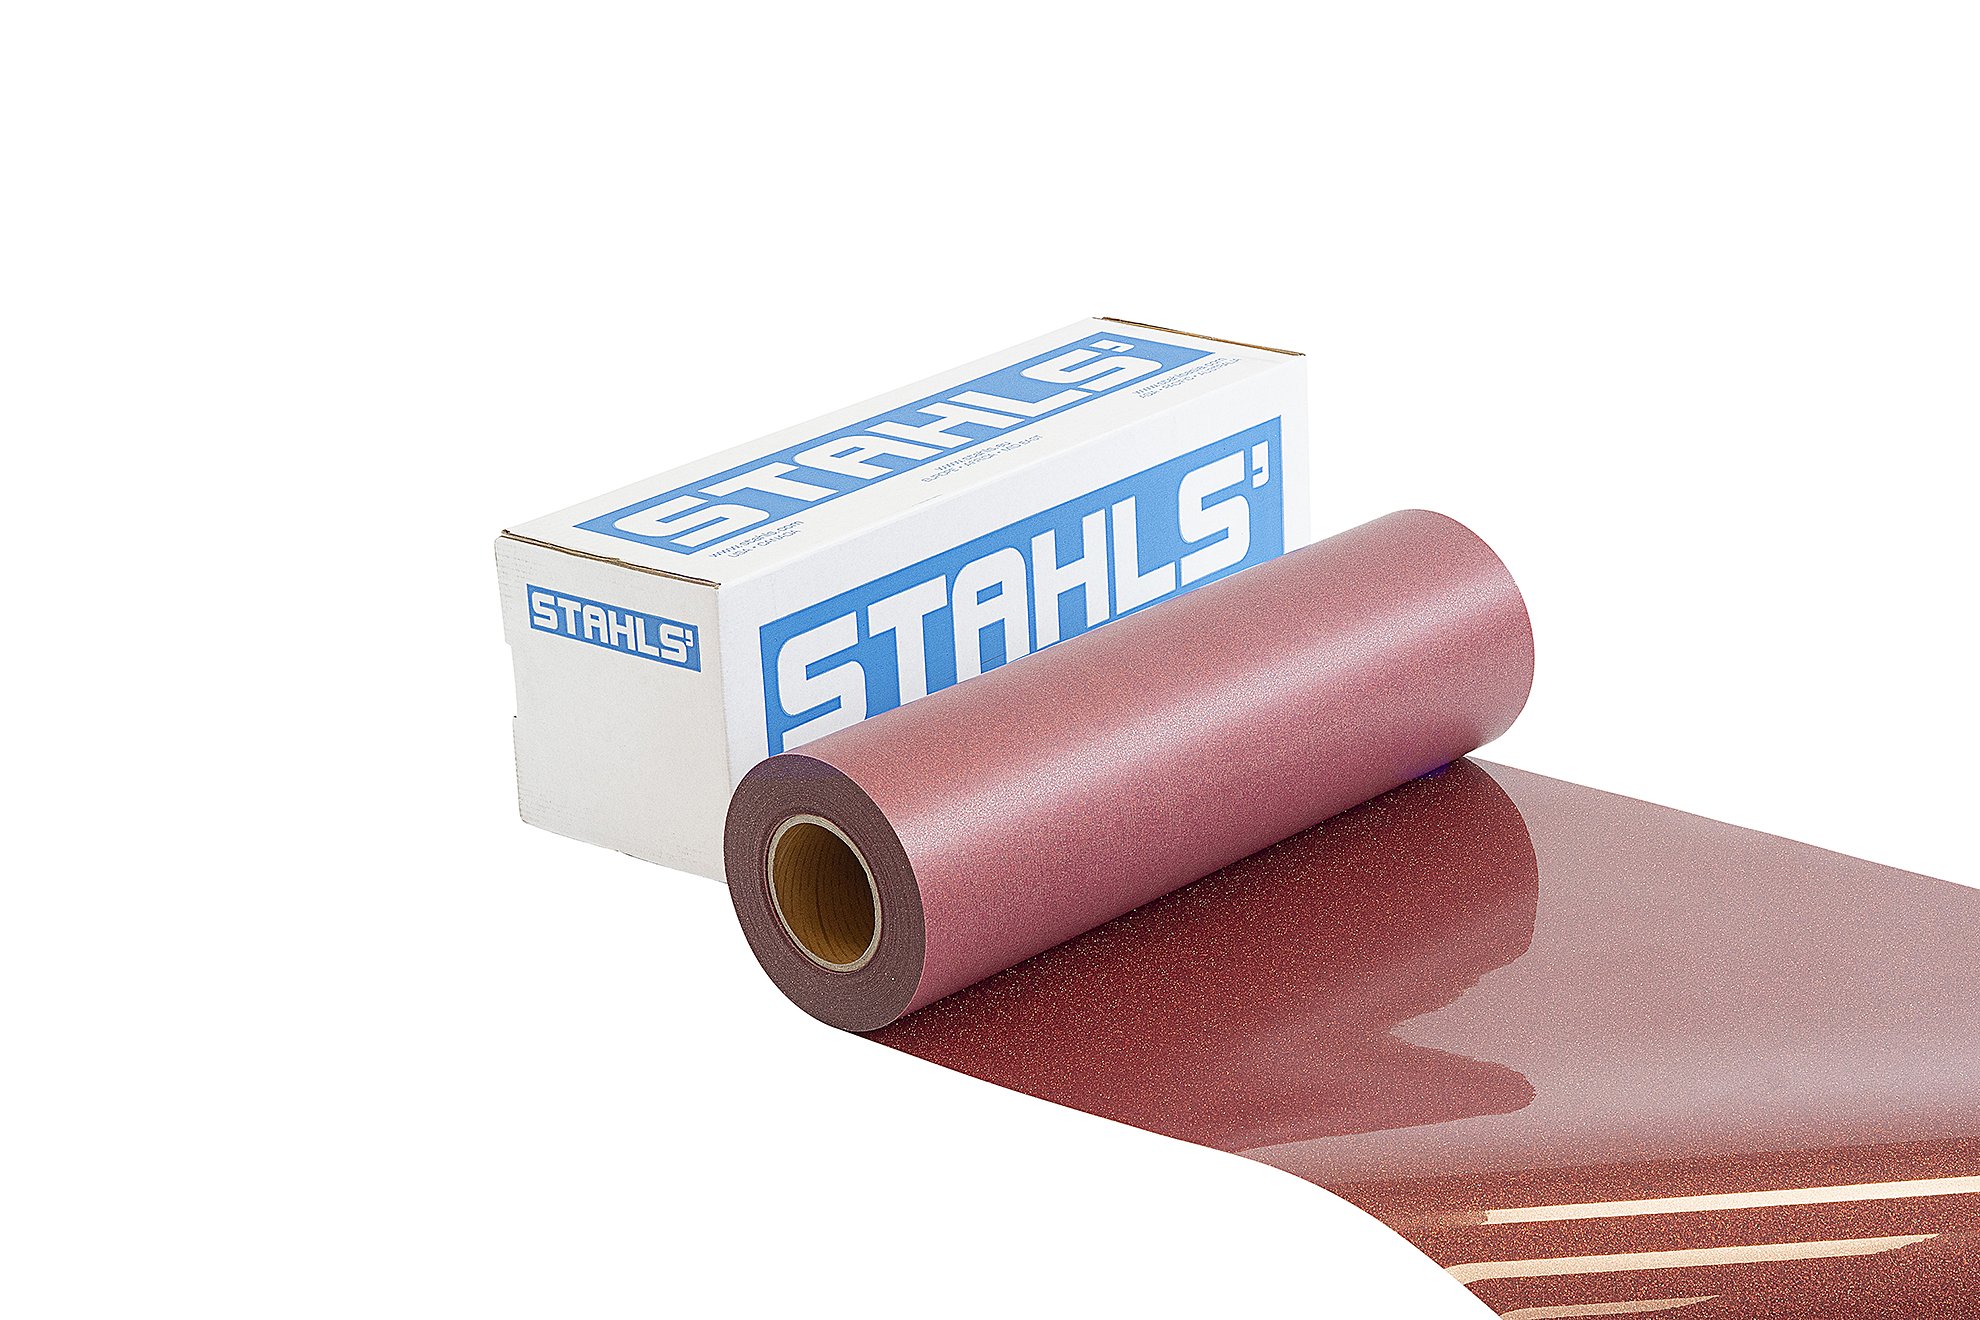 Stahls CAD-CUT Glitter